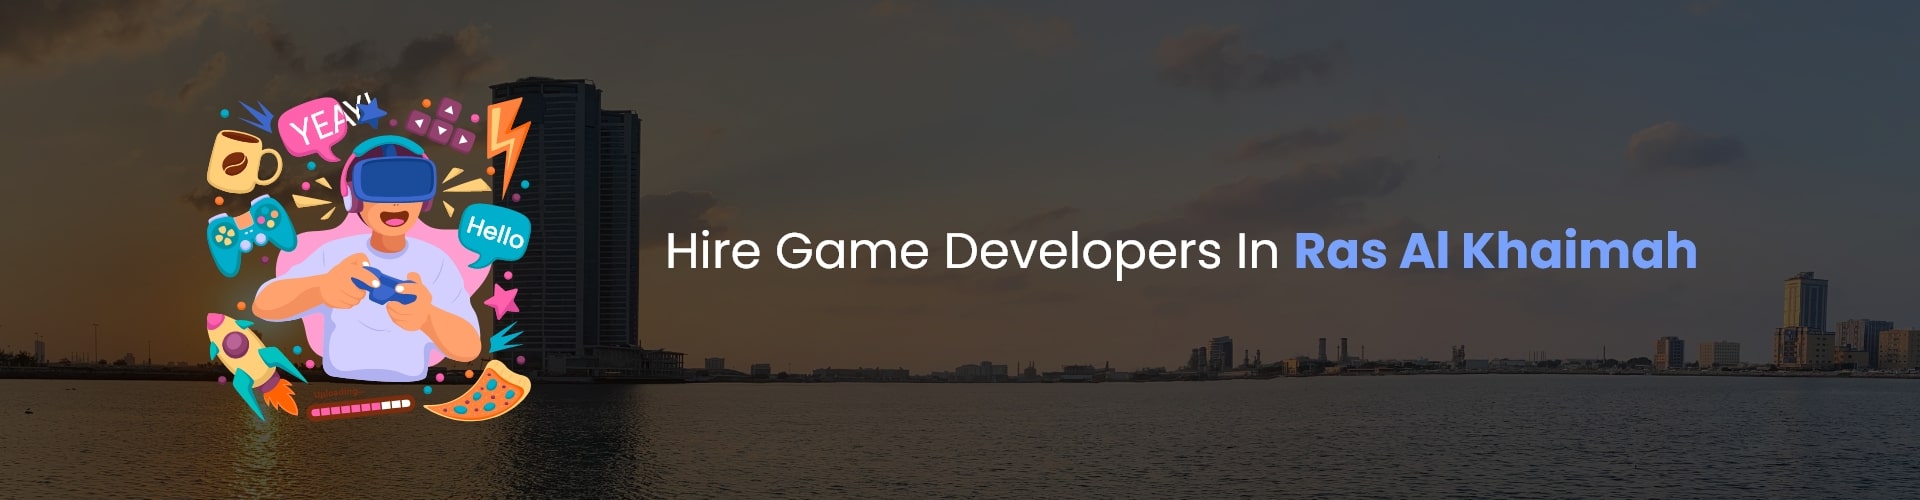 hire game developers in ras al khaimah